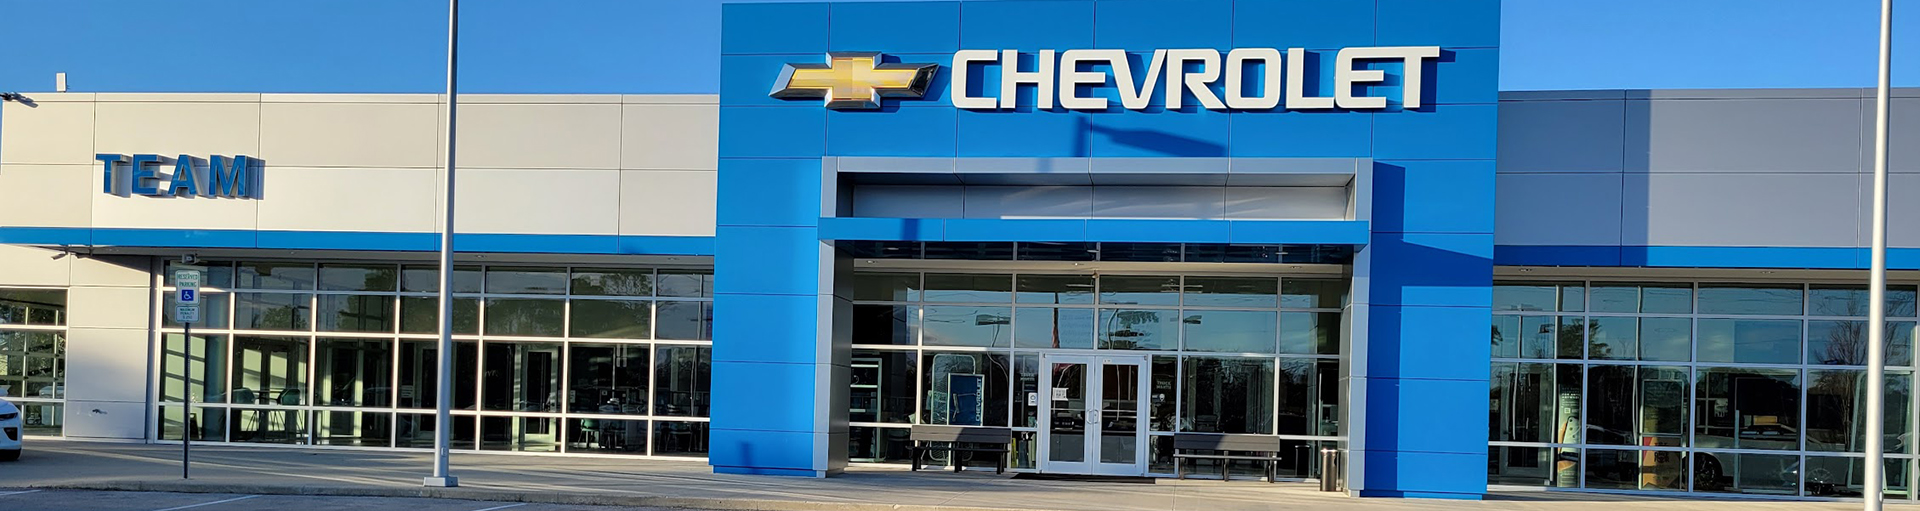 Chevrolet A/C Service in Swansboro, NC